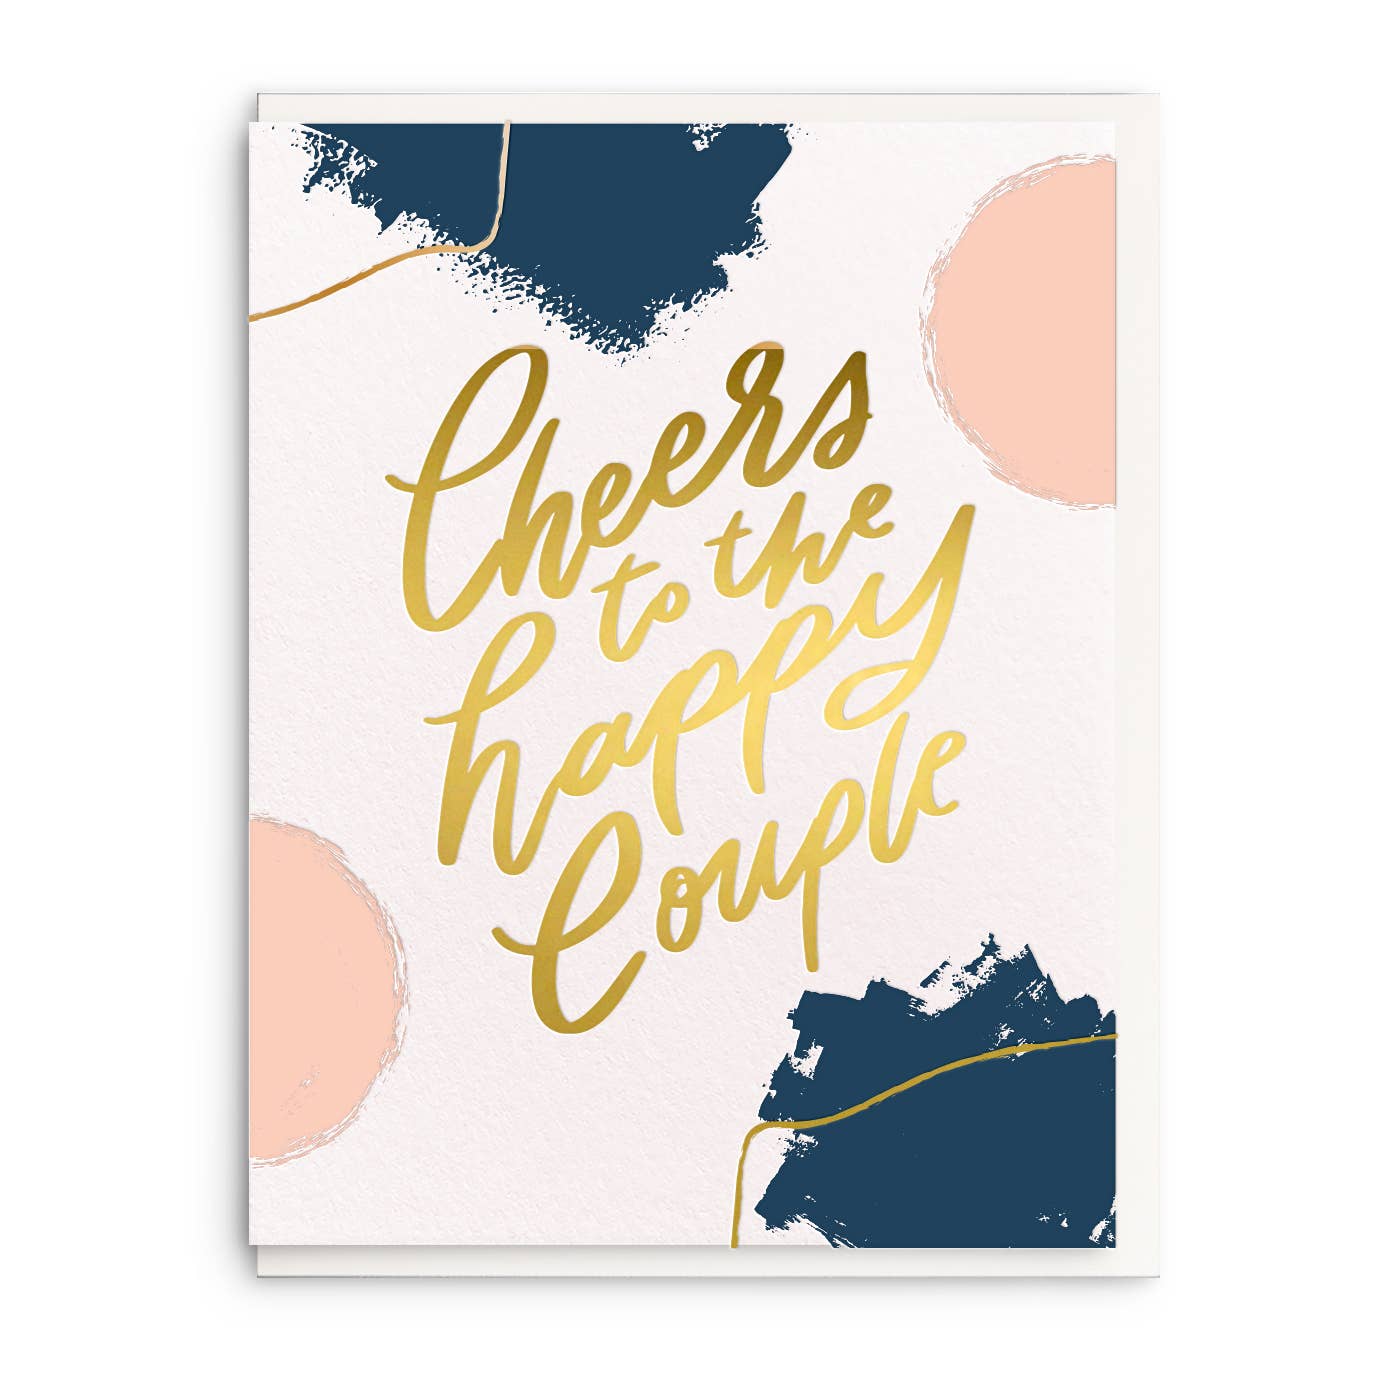 Cheers - Letterpress Wedding Greeting Card